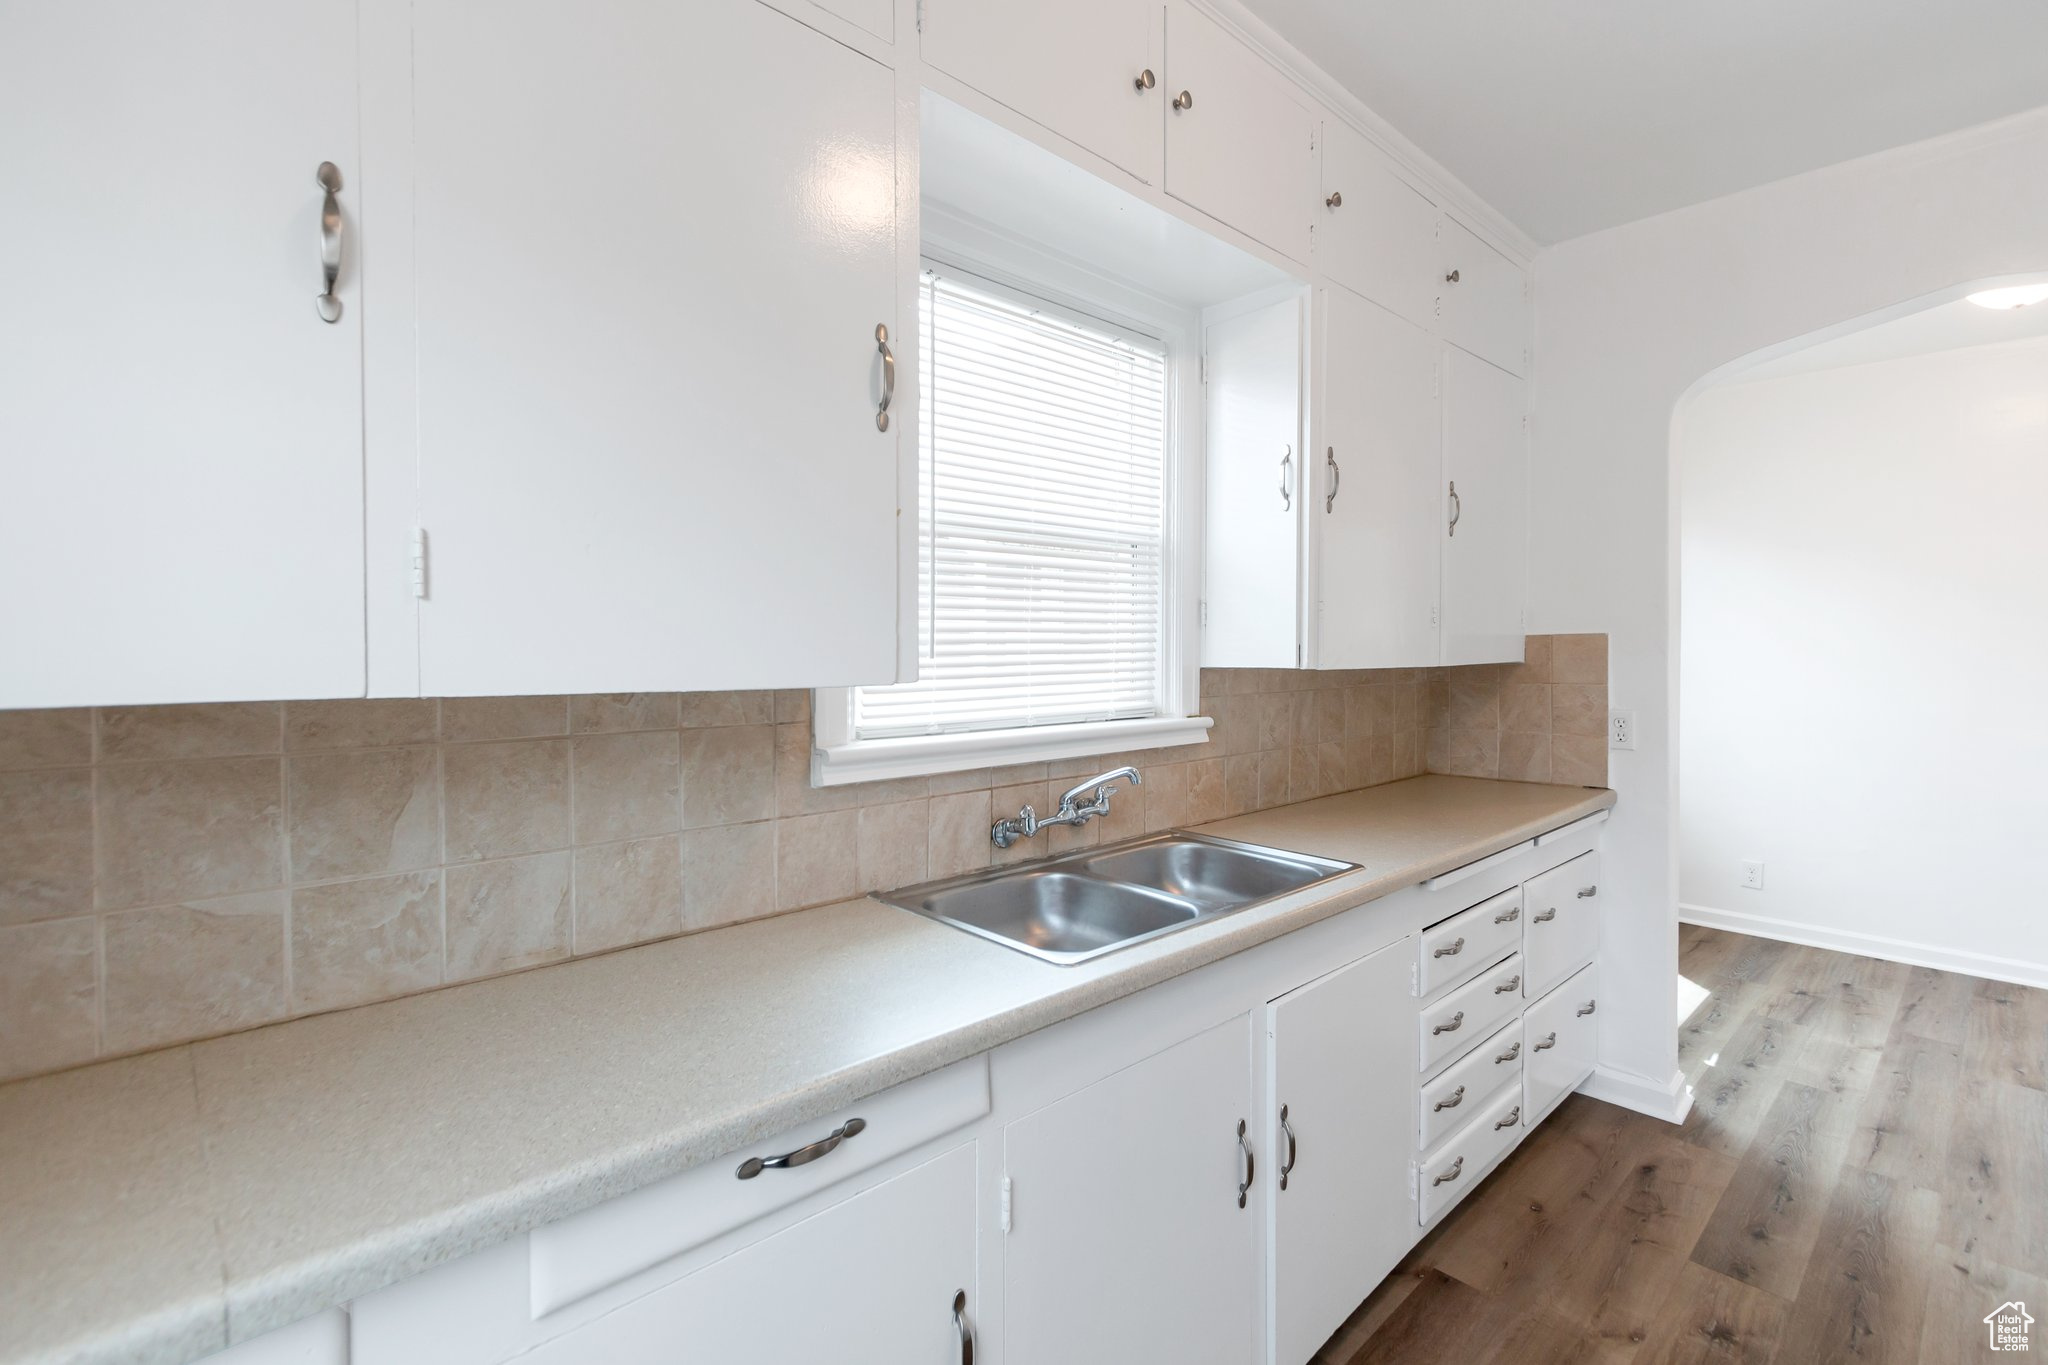 Kitchen with hardwood / wood-style flooring, tasteful backsplash, white cabinetry, and sink